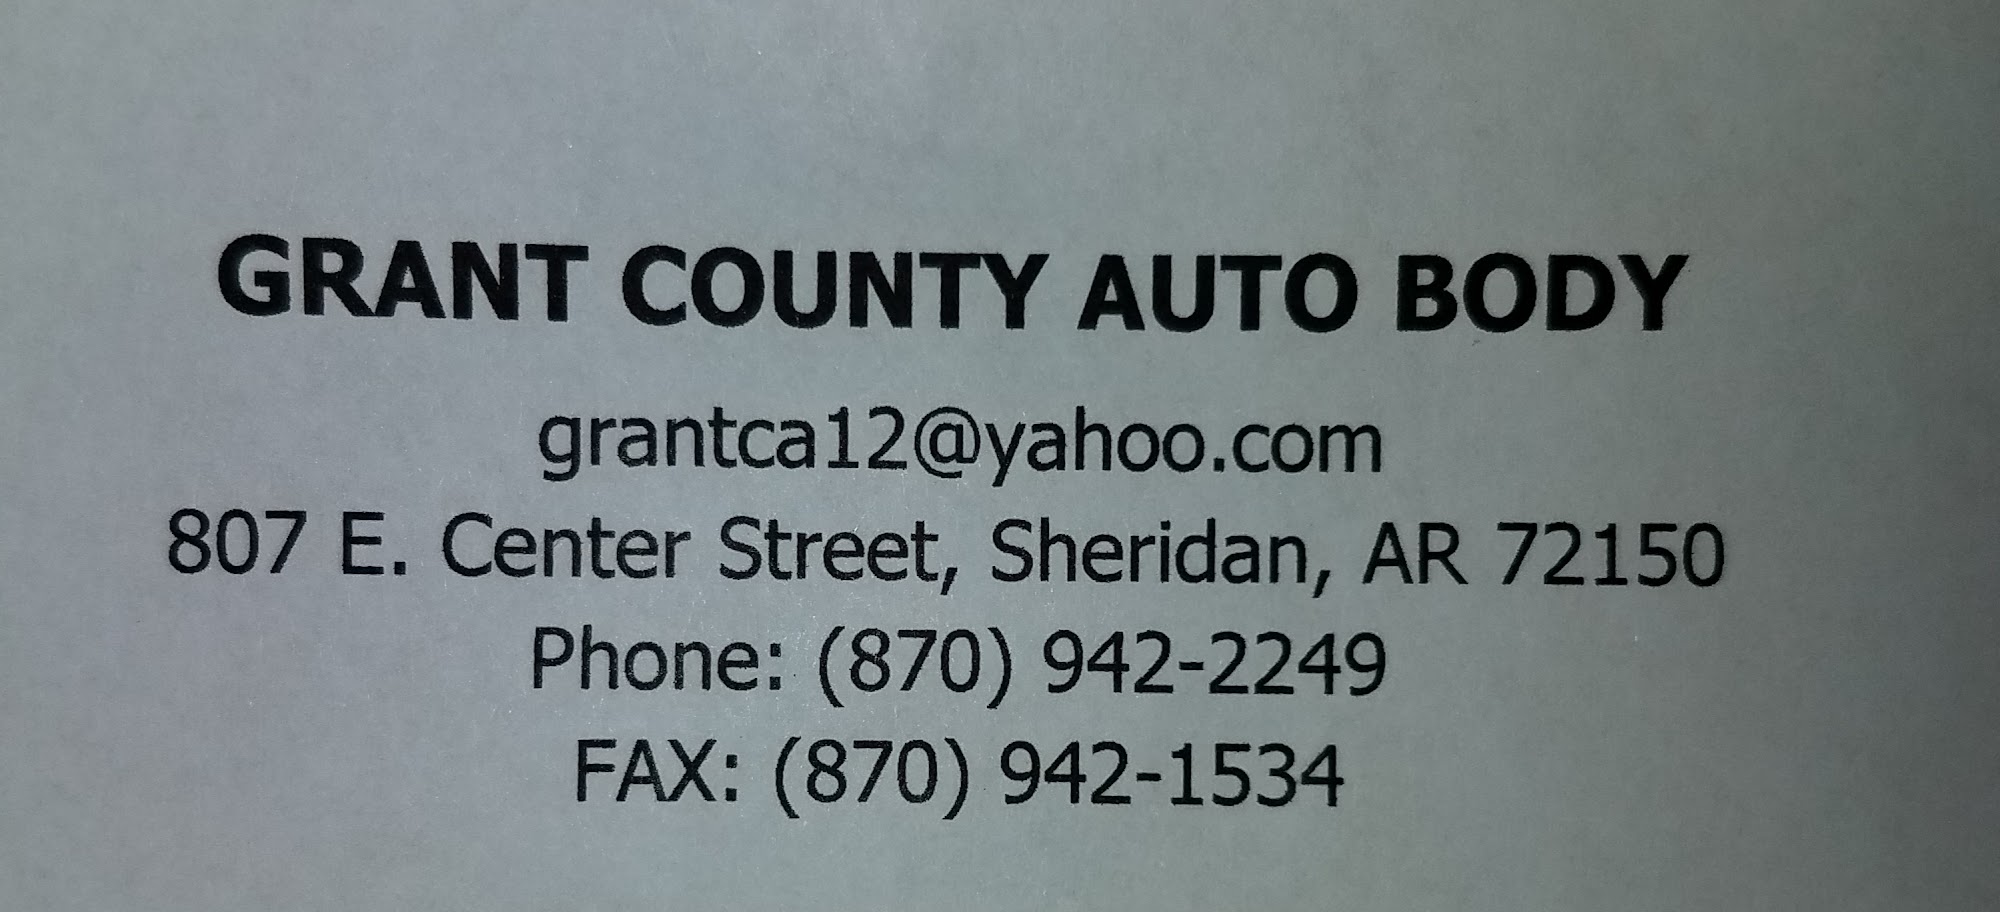 Grant County Auto Body 807 E Center St, Sheridan Arkansas 72150